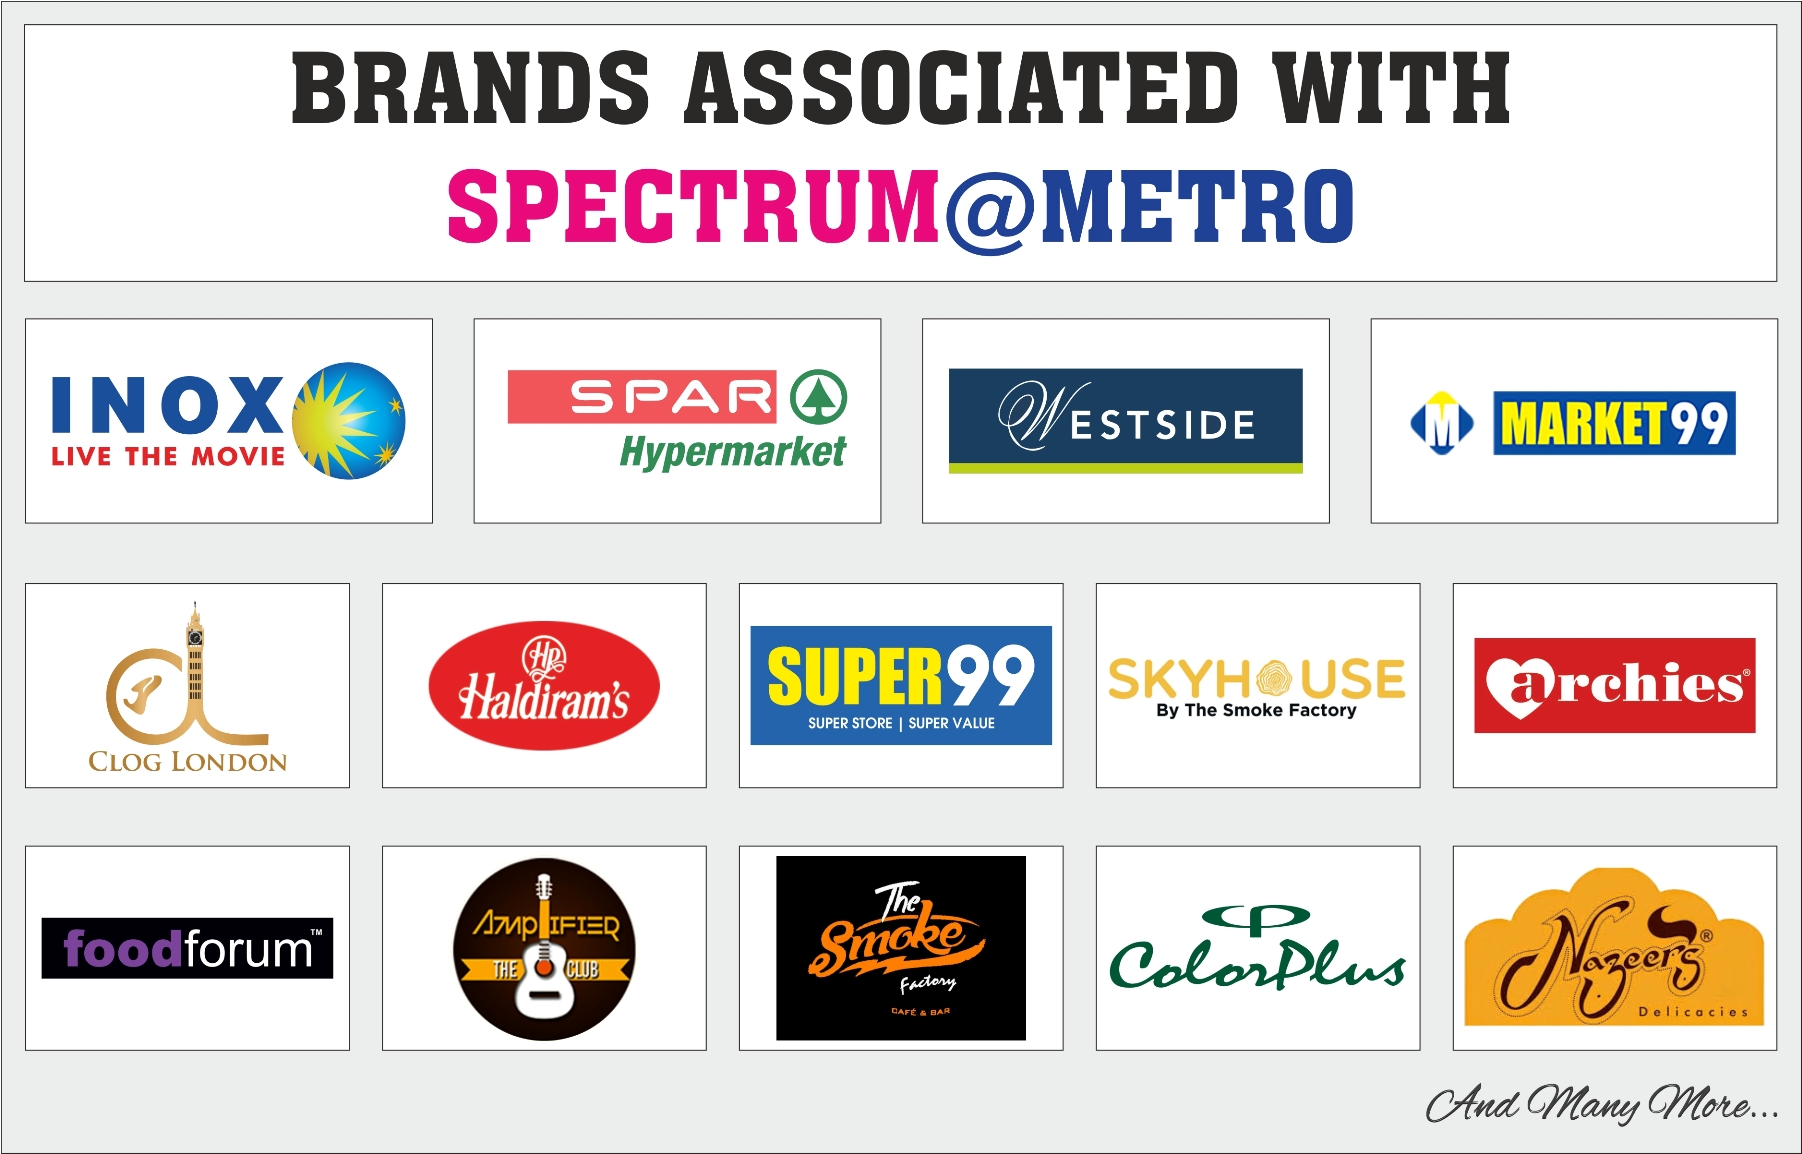 multi-brand retail experience at Spectrum@Metro